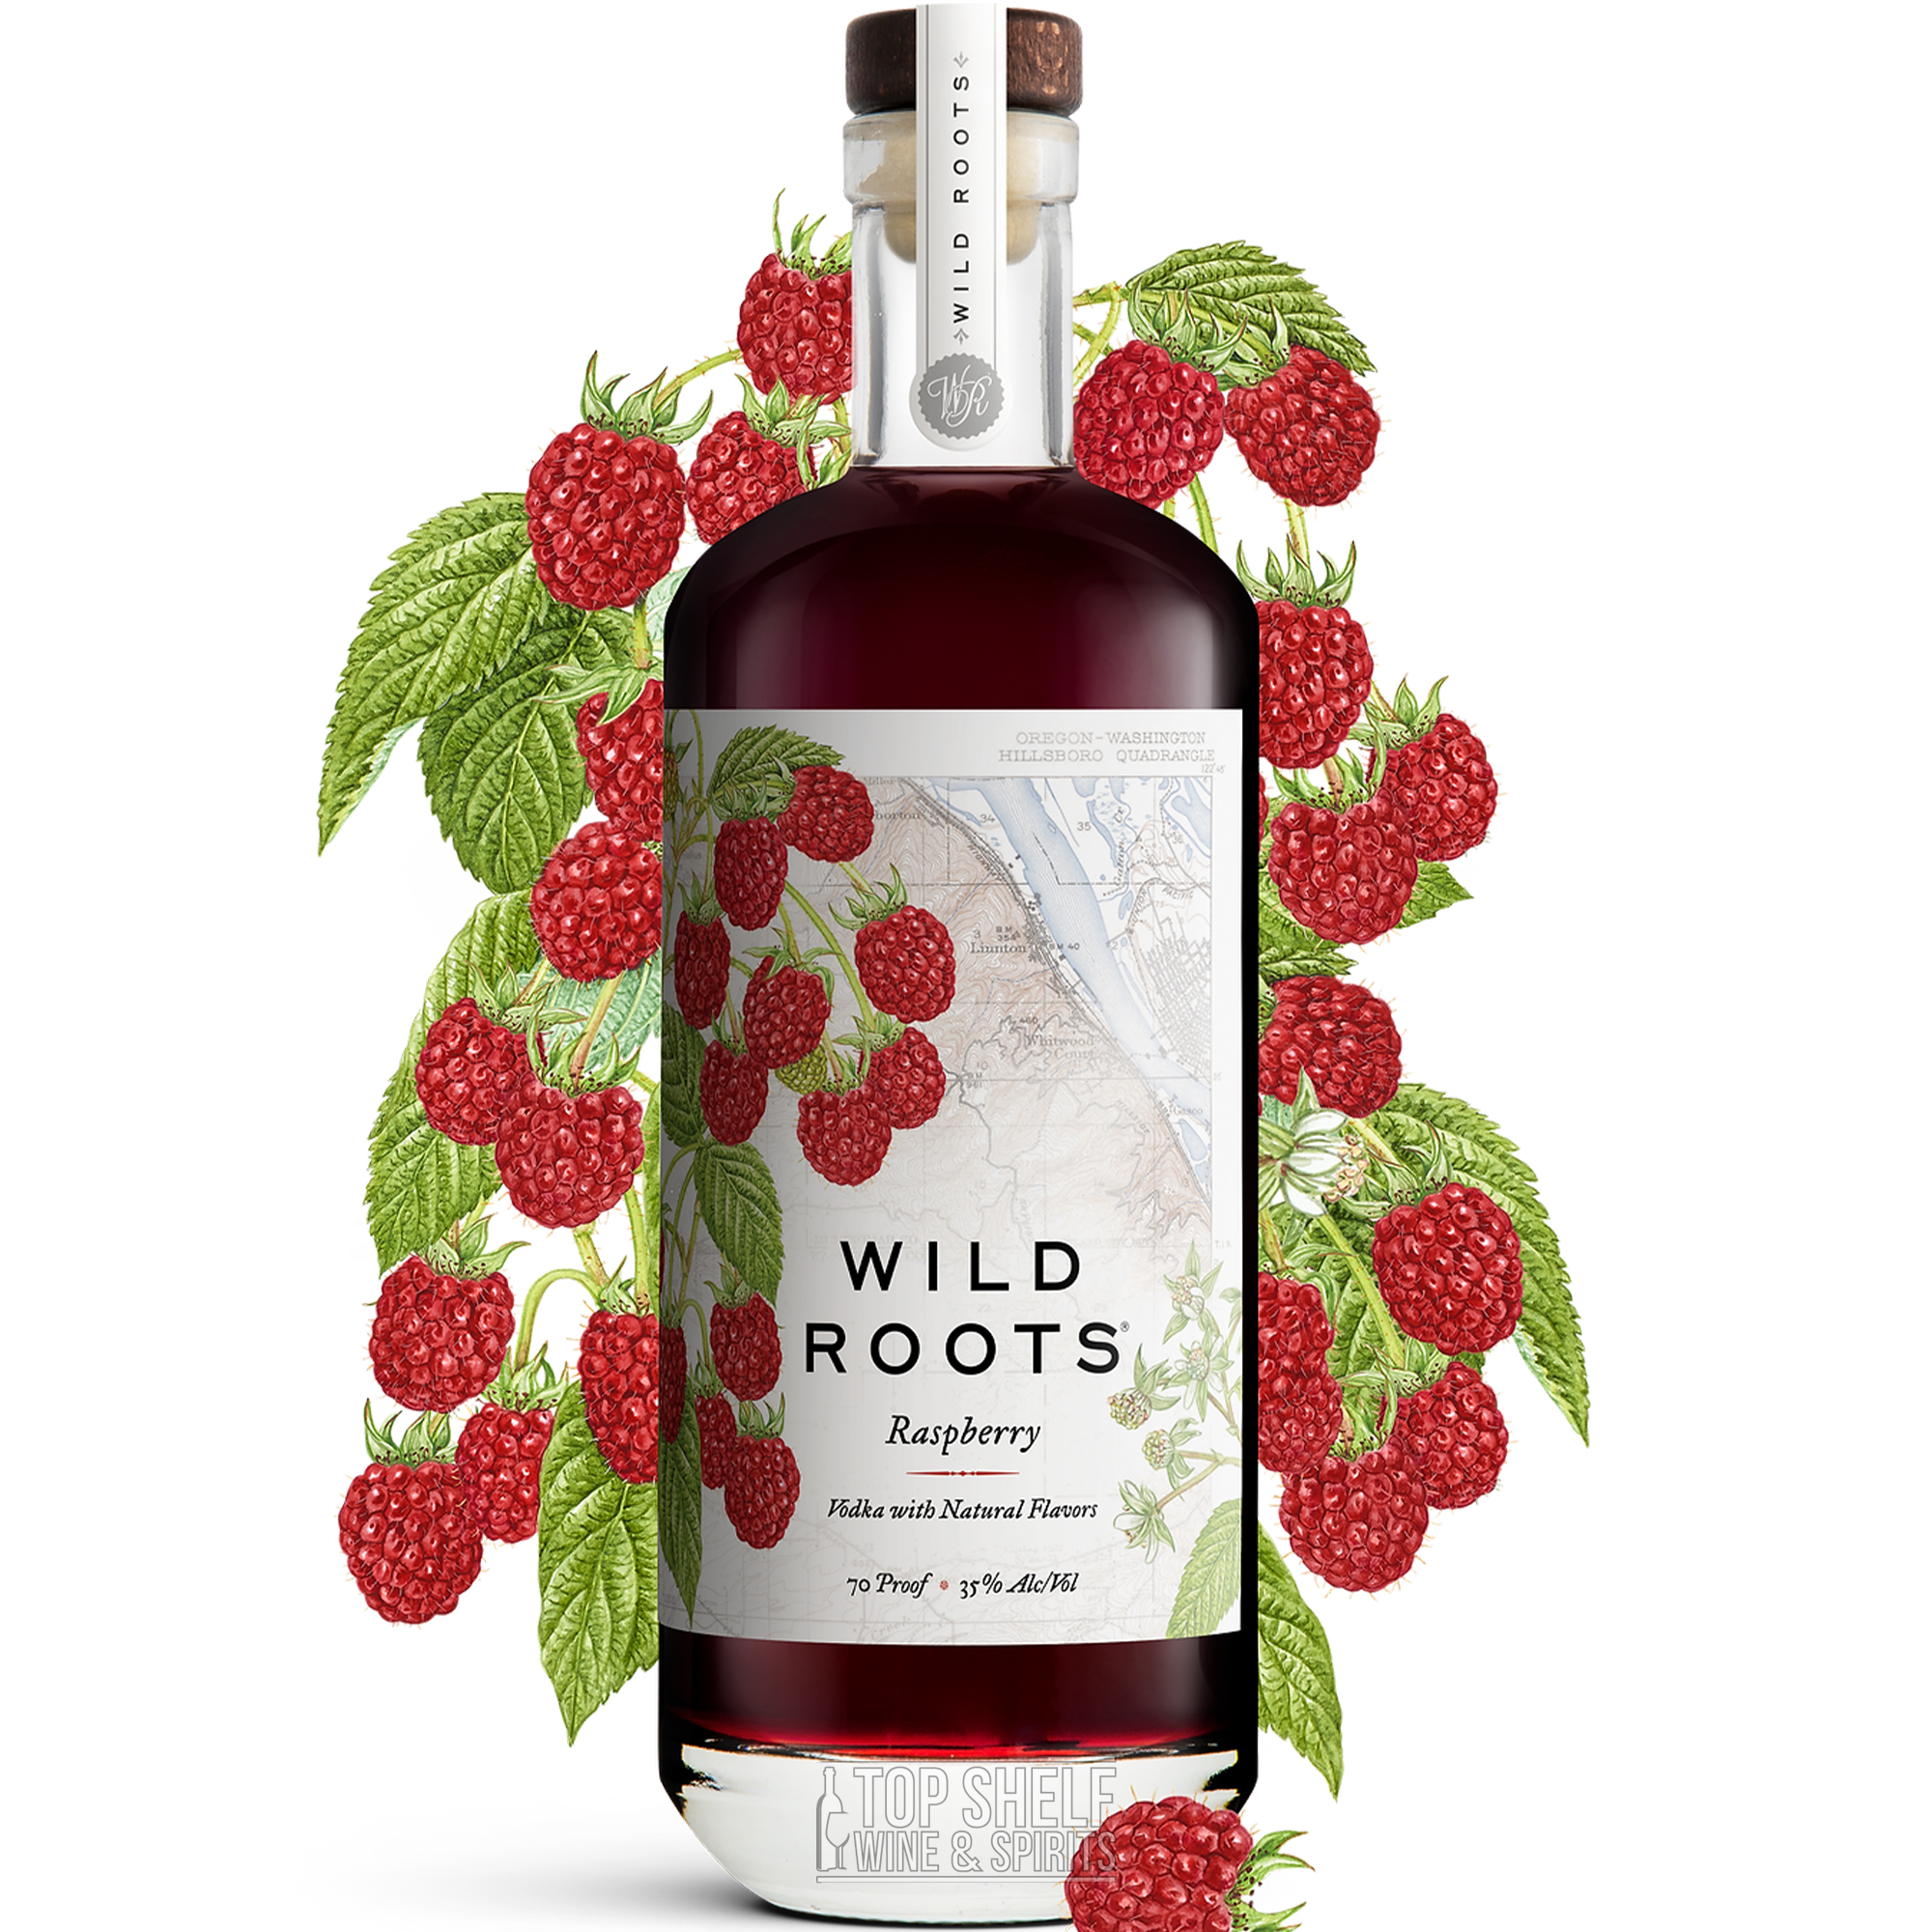 Wild Roots Raspberry Vodka